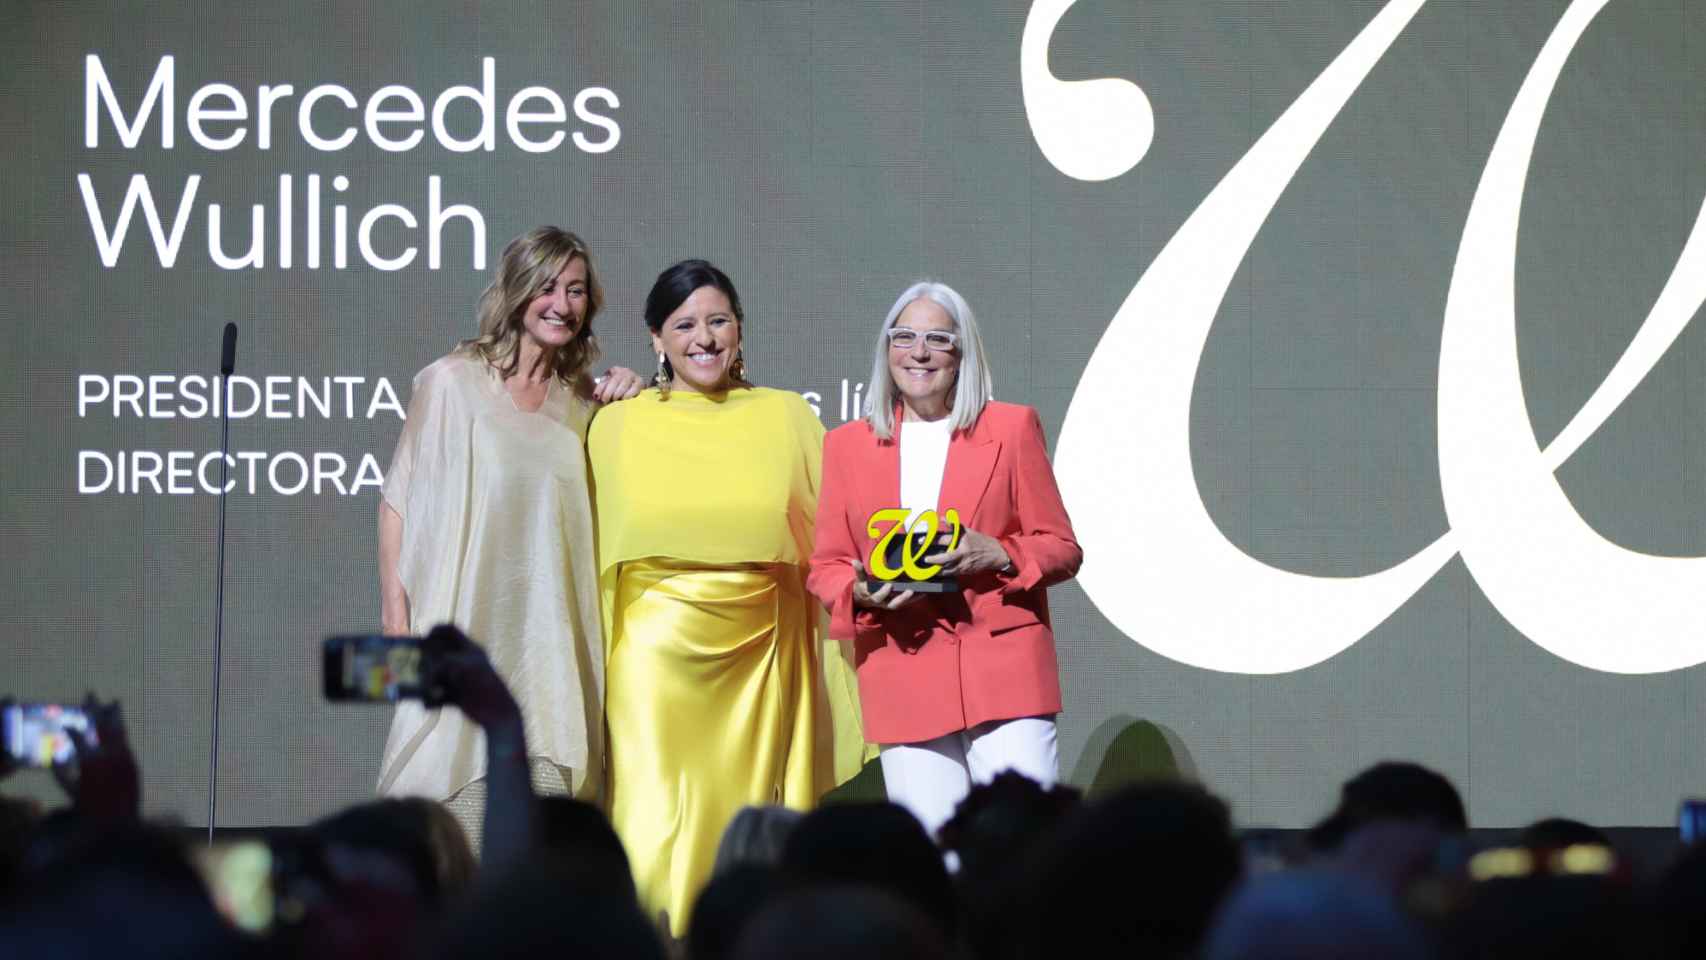 Mercedes Wullich recibe el premio With al liderazgo e inspiración